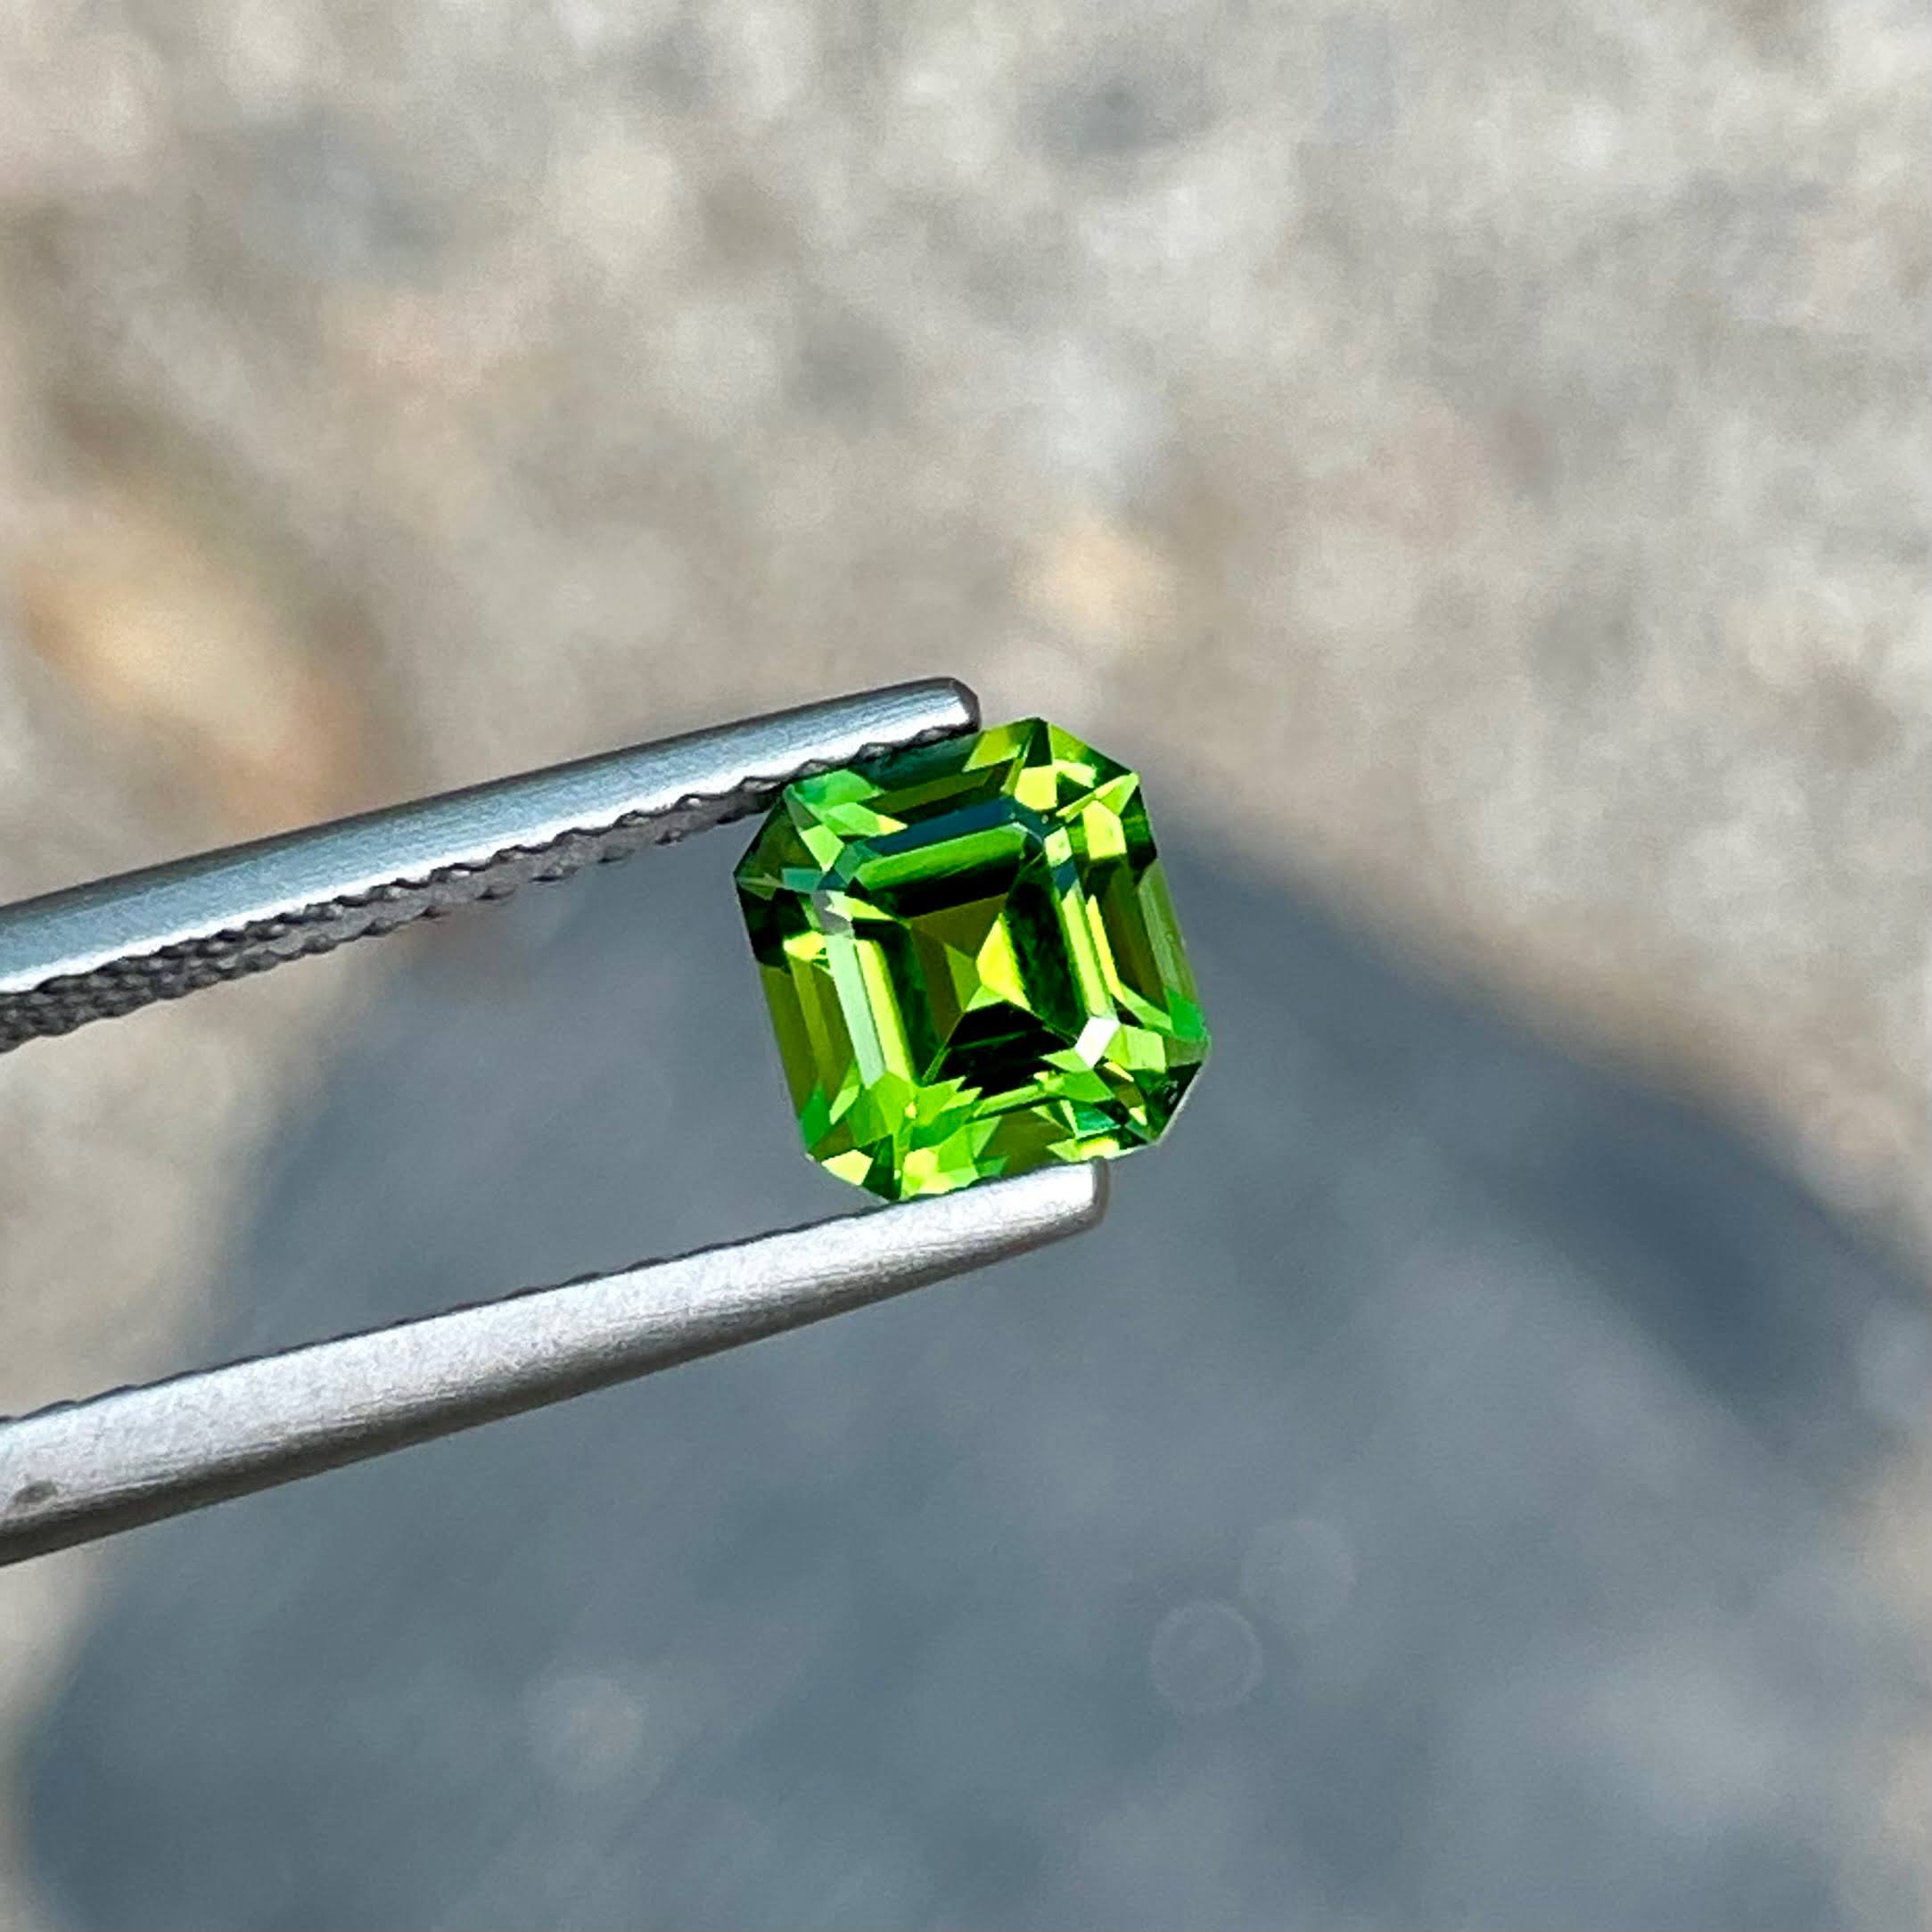 1.15 carats Green Tourmaline Stone